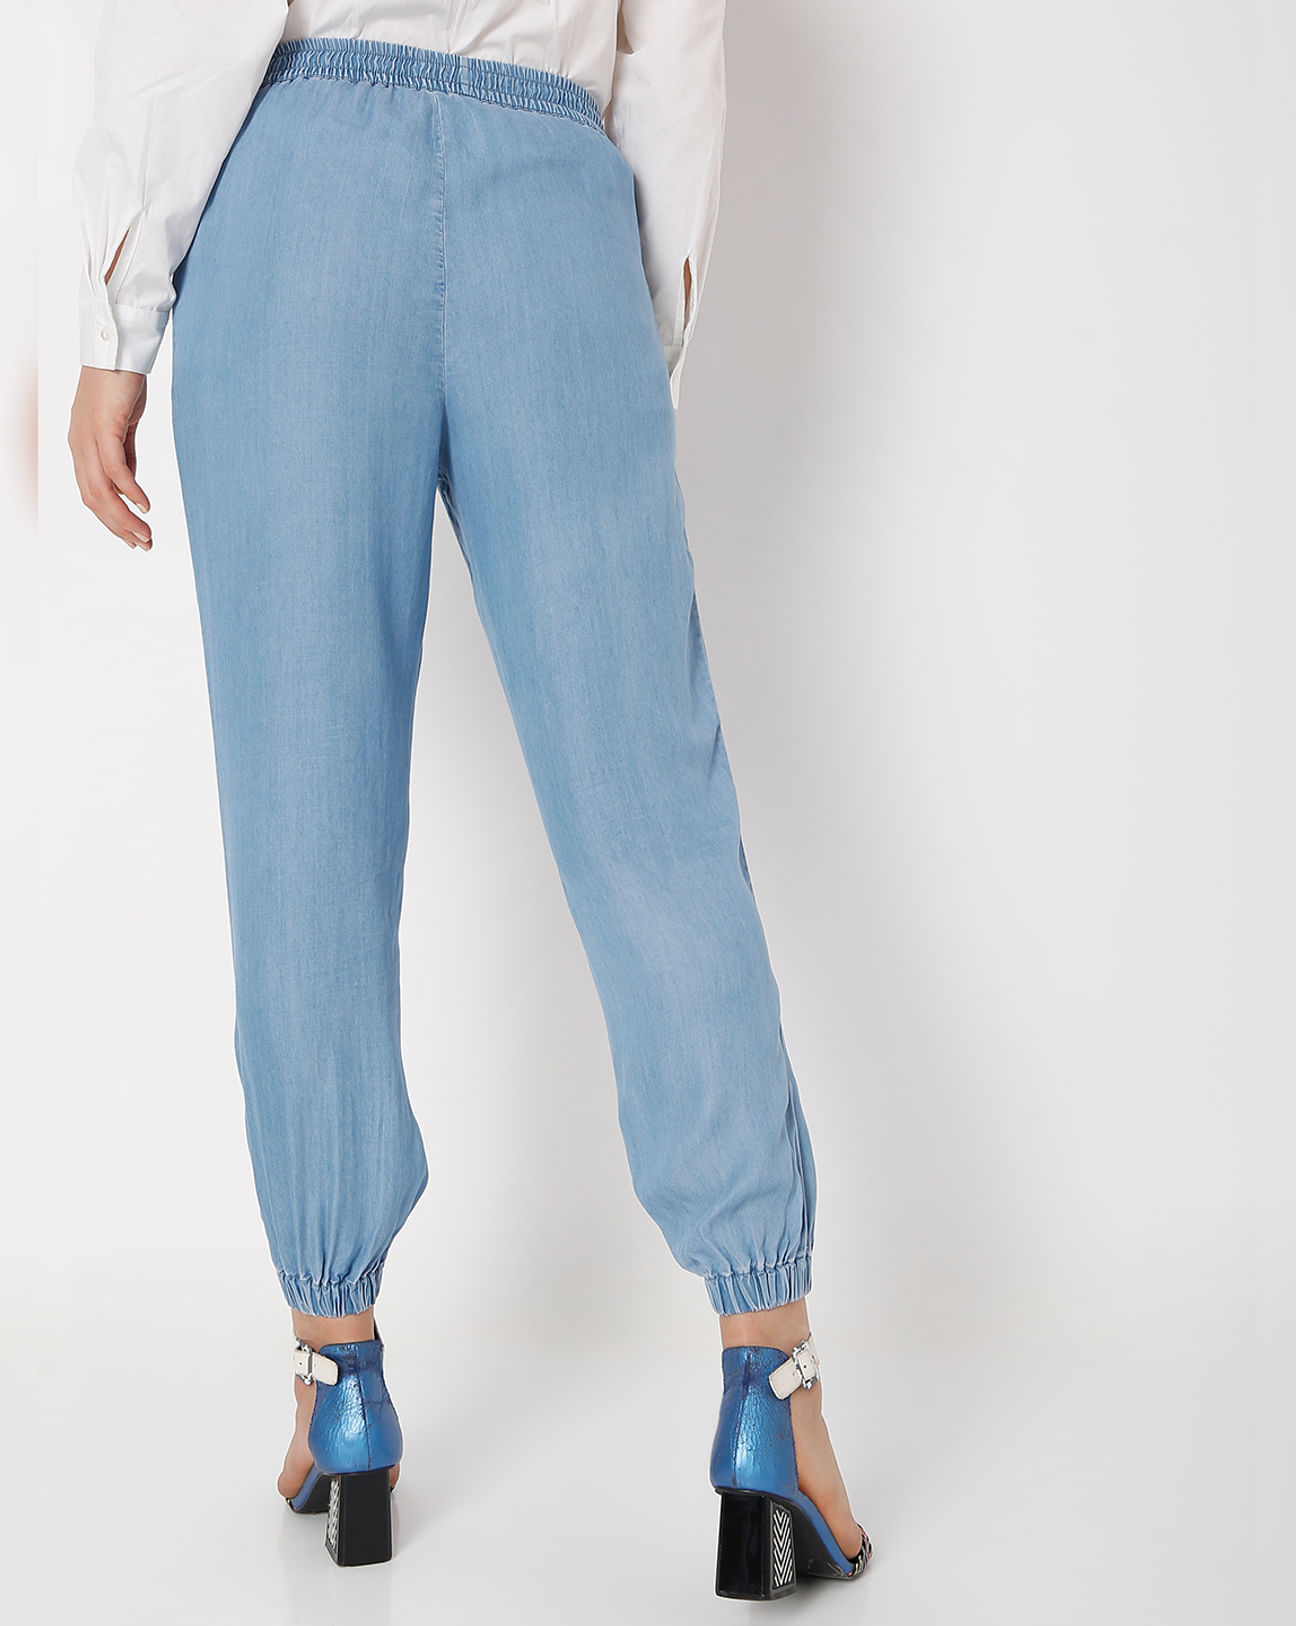 Buy Women Blue Utility Denim Jogger Jeans Online At Best Price